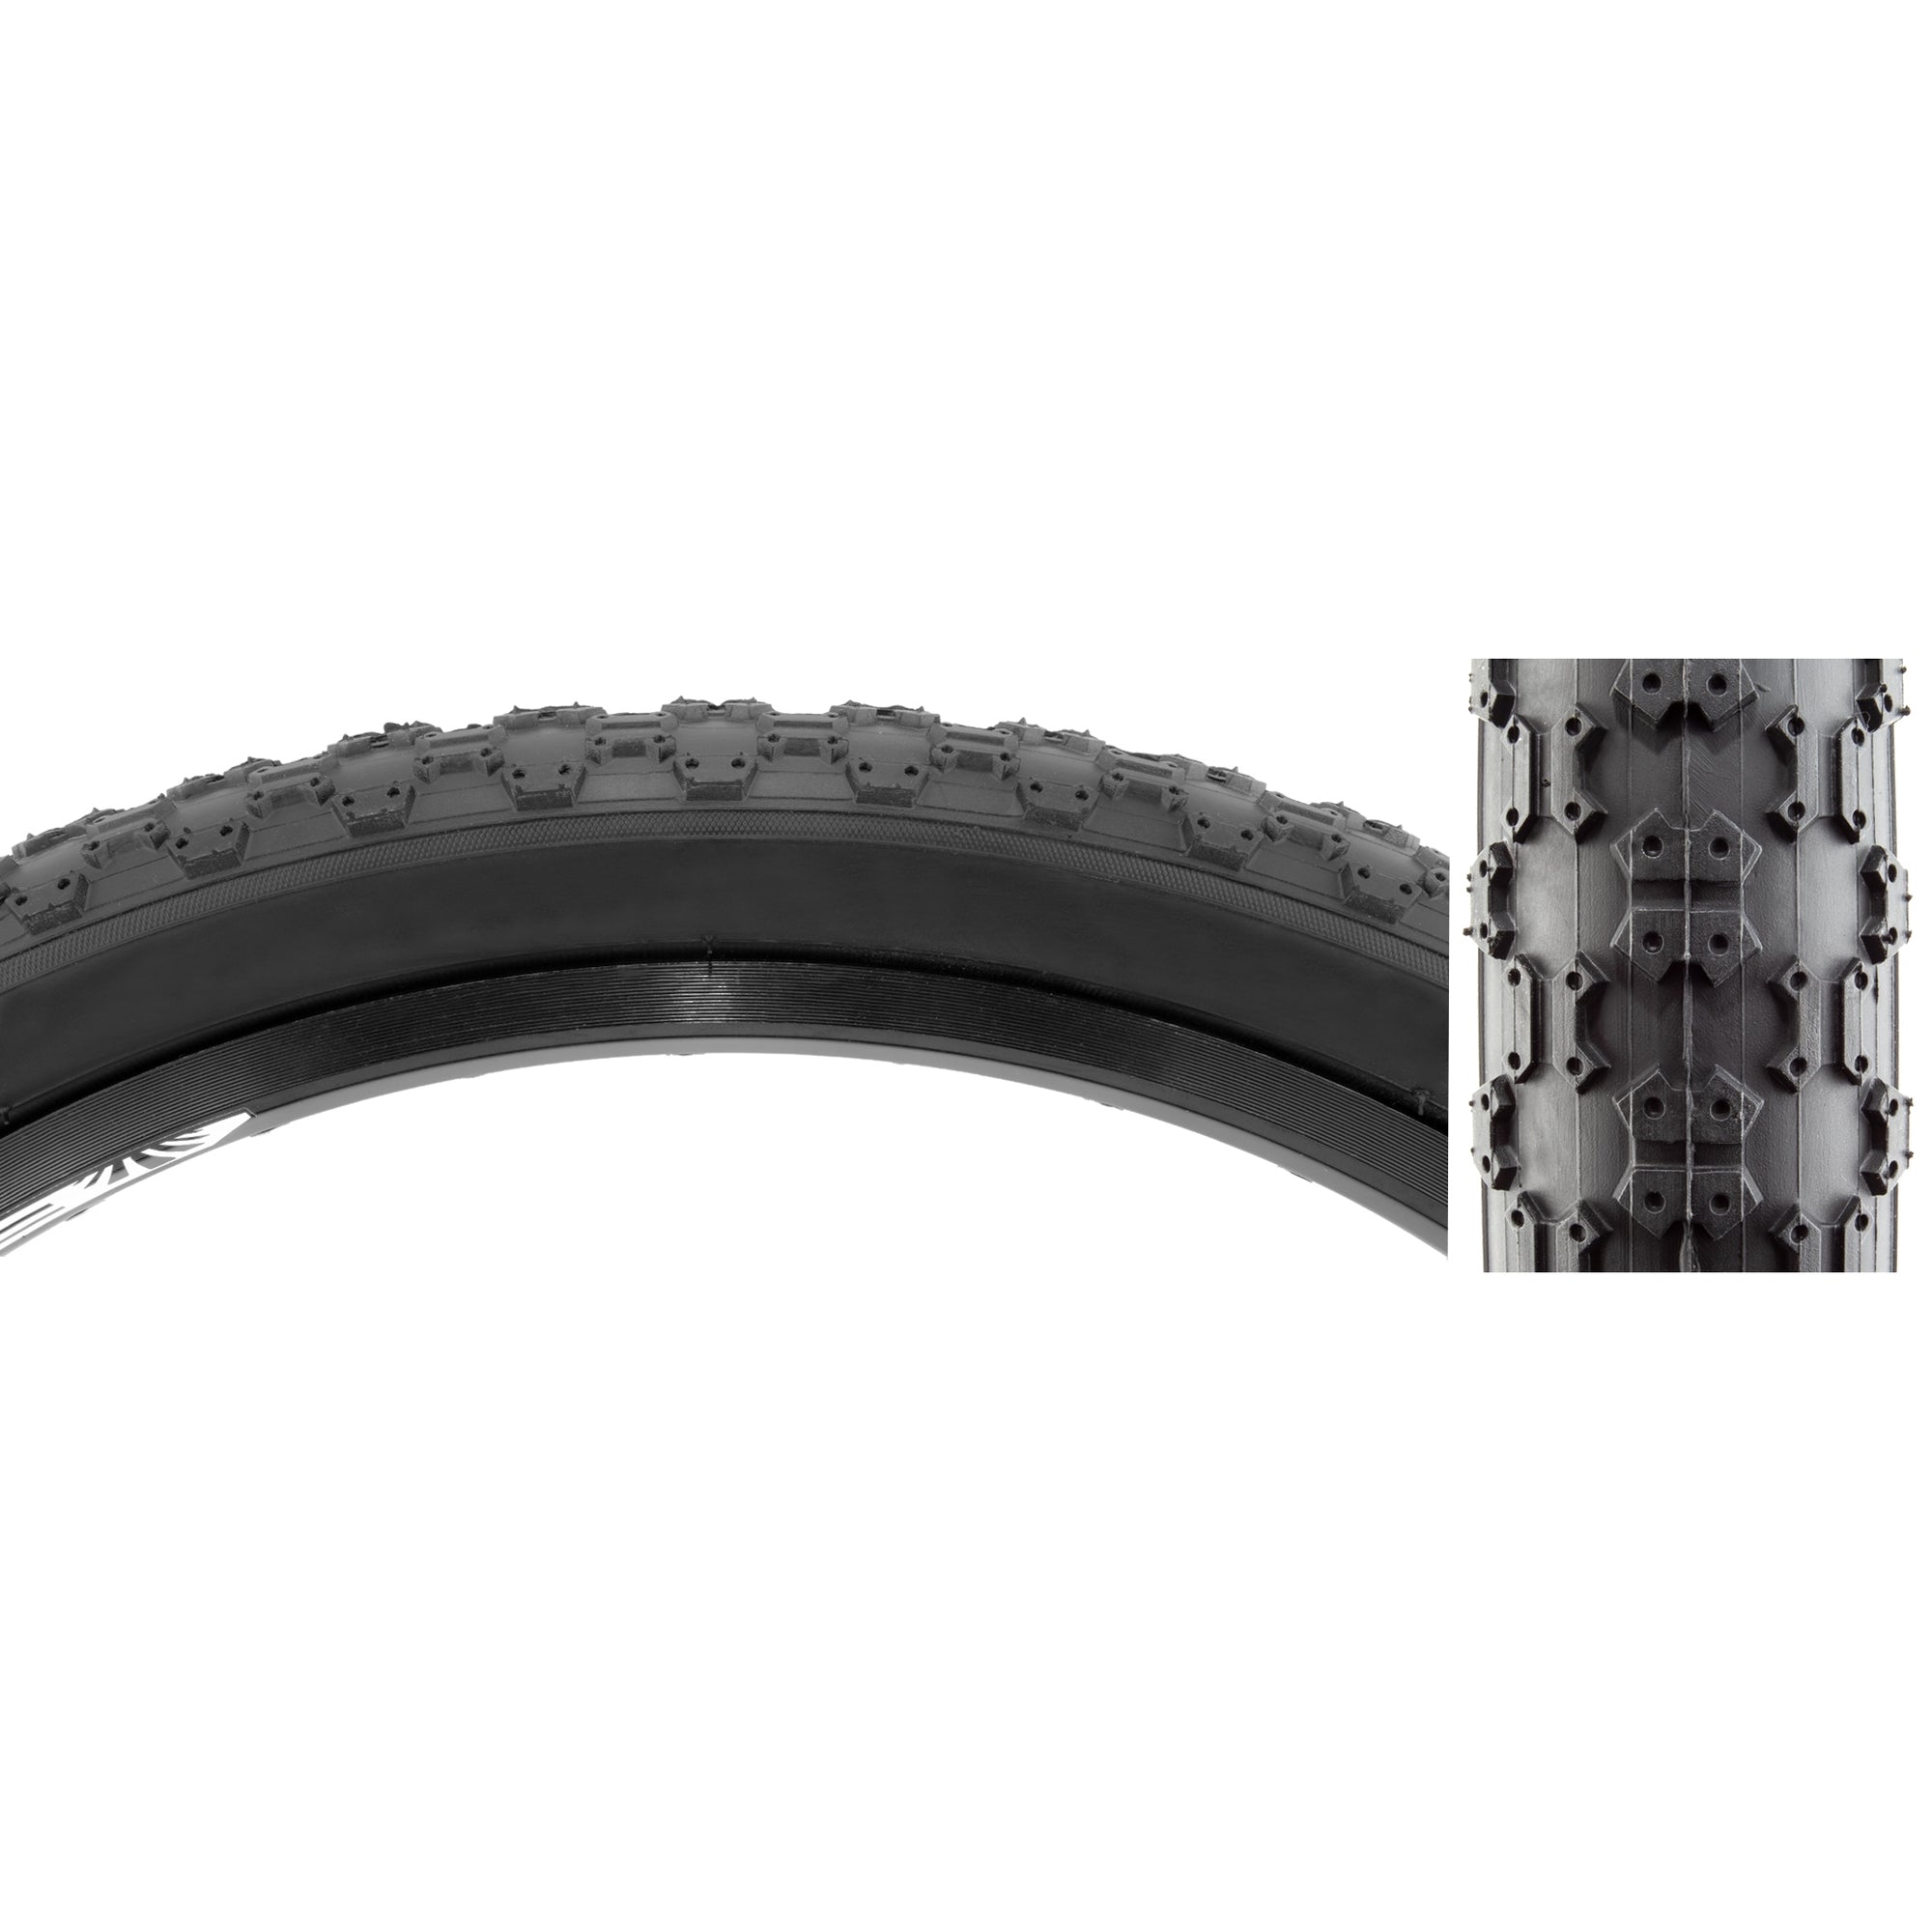 16x1.75 Ornate Comp III BMX tire - All Black